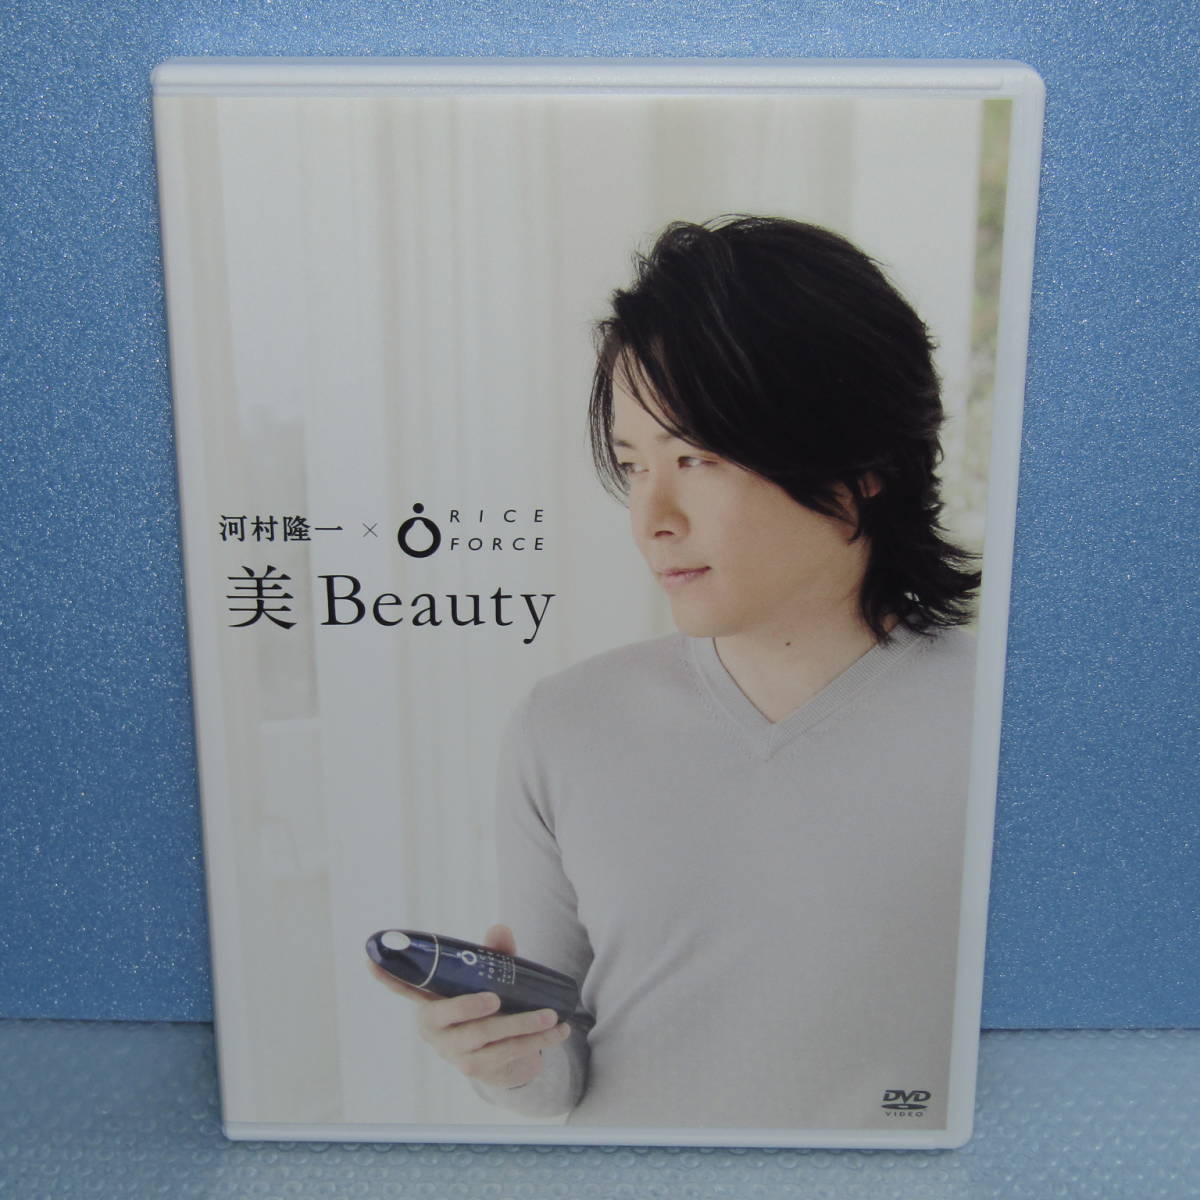 DVD「河村隆一 (非売品) 美 BeautyライスフォースRICE FORCE」_画像1